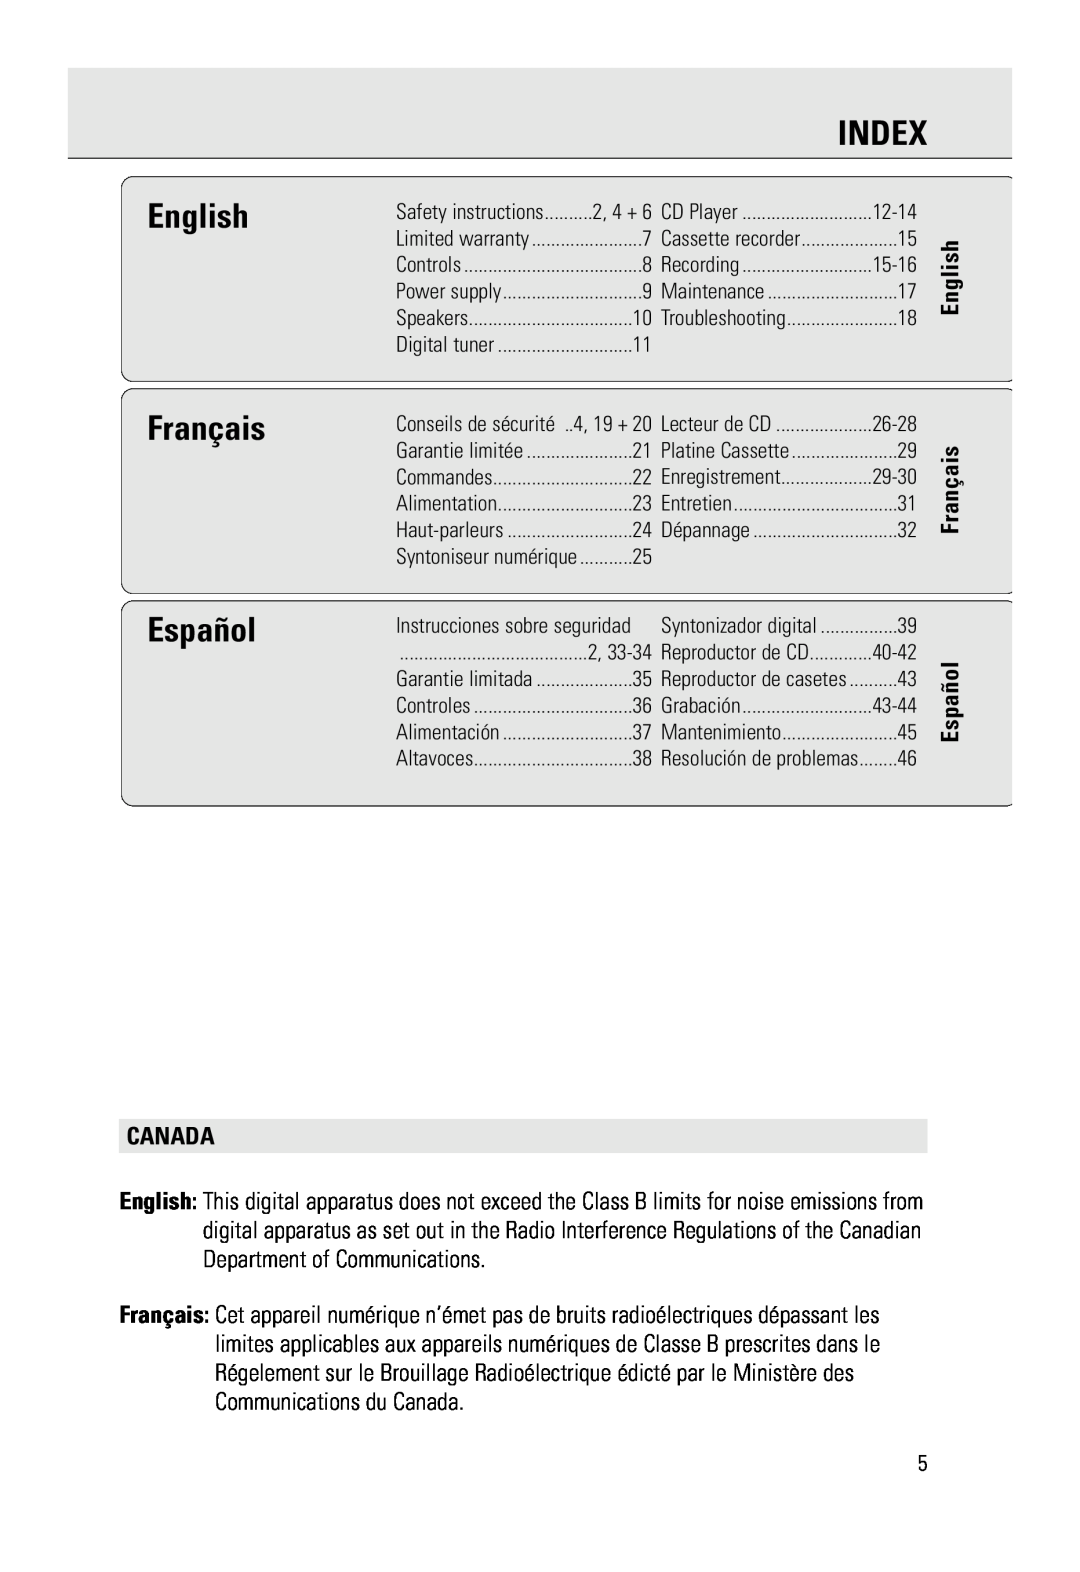 Philips AZ 2785 manual Index, English, Français, Español, Canada, Instrucciones sobre seguridad 